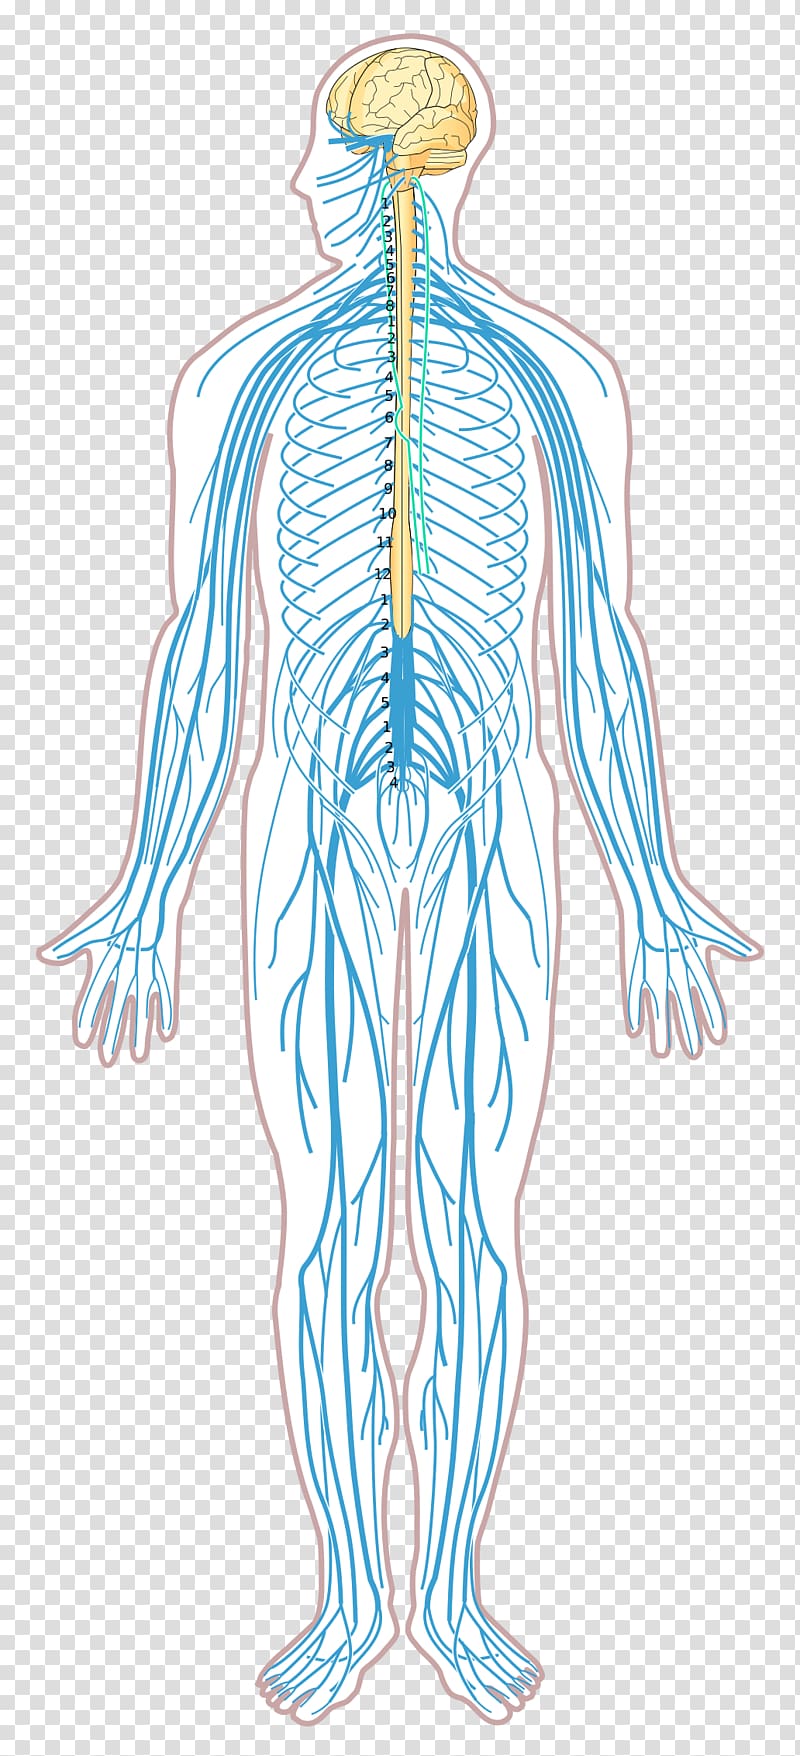 Nervous System Diagram Drawing : Image Showing Human Nervous System Stock Vector 232256014 ...